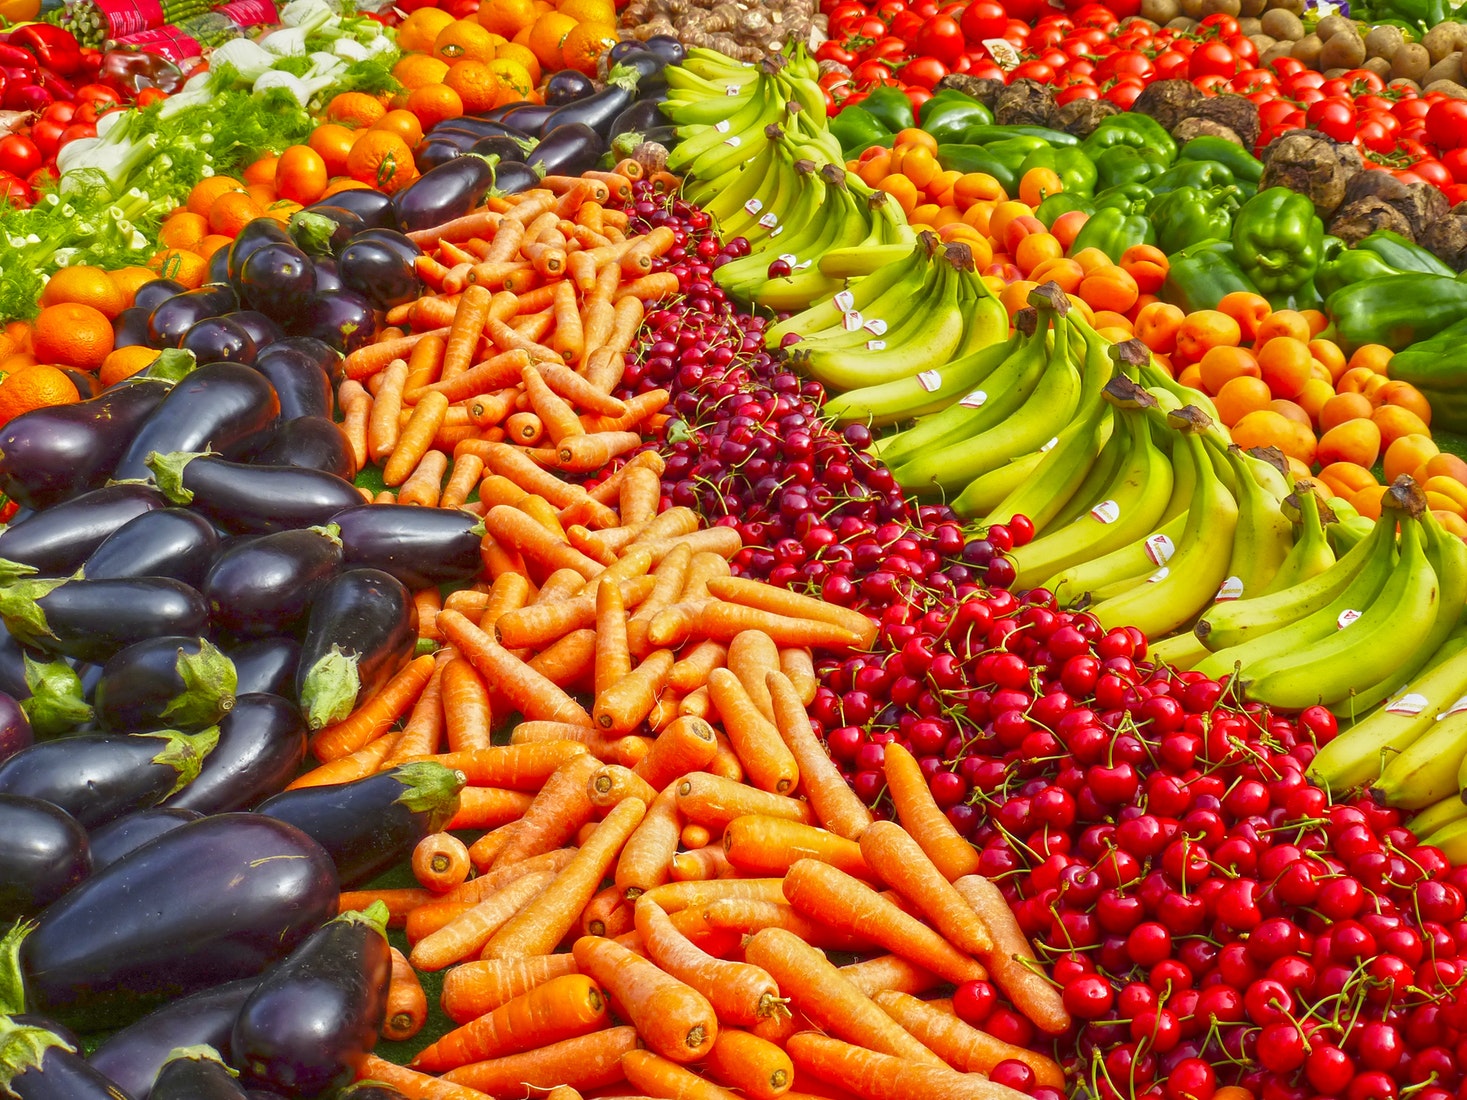 Mark McCool Sarasota - Fruits and Vegetables